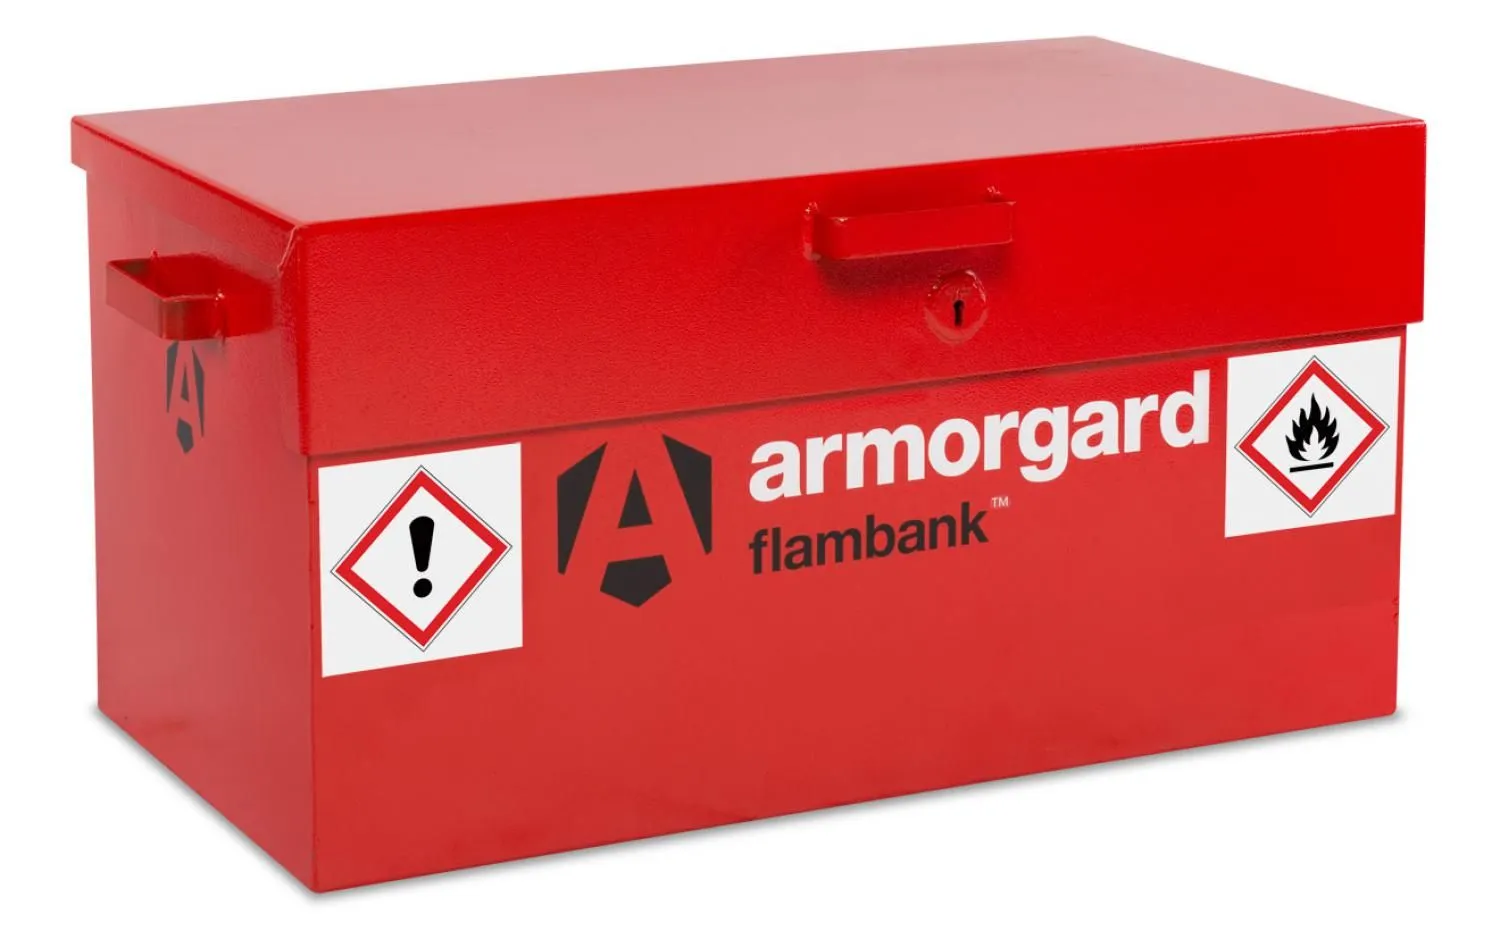 Armorgard FlamBank Hazardous Storage Box 980 x 540 x 475mm Red